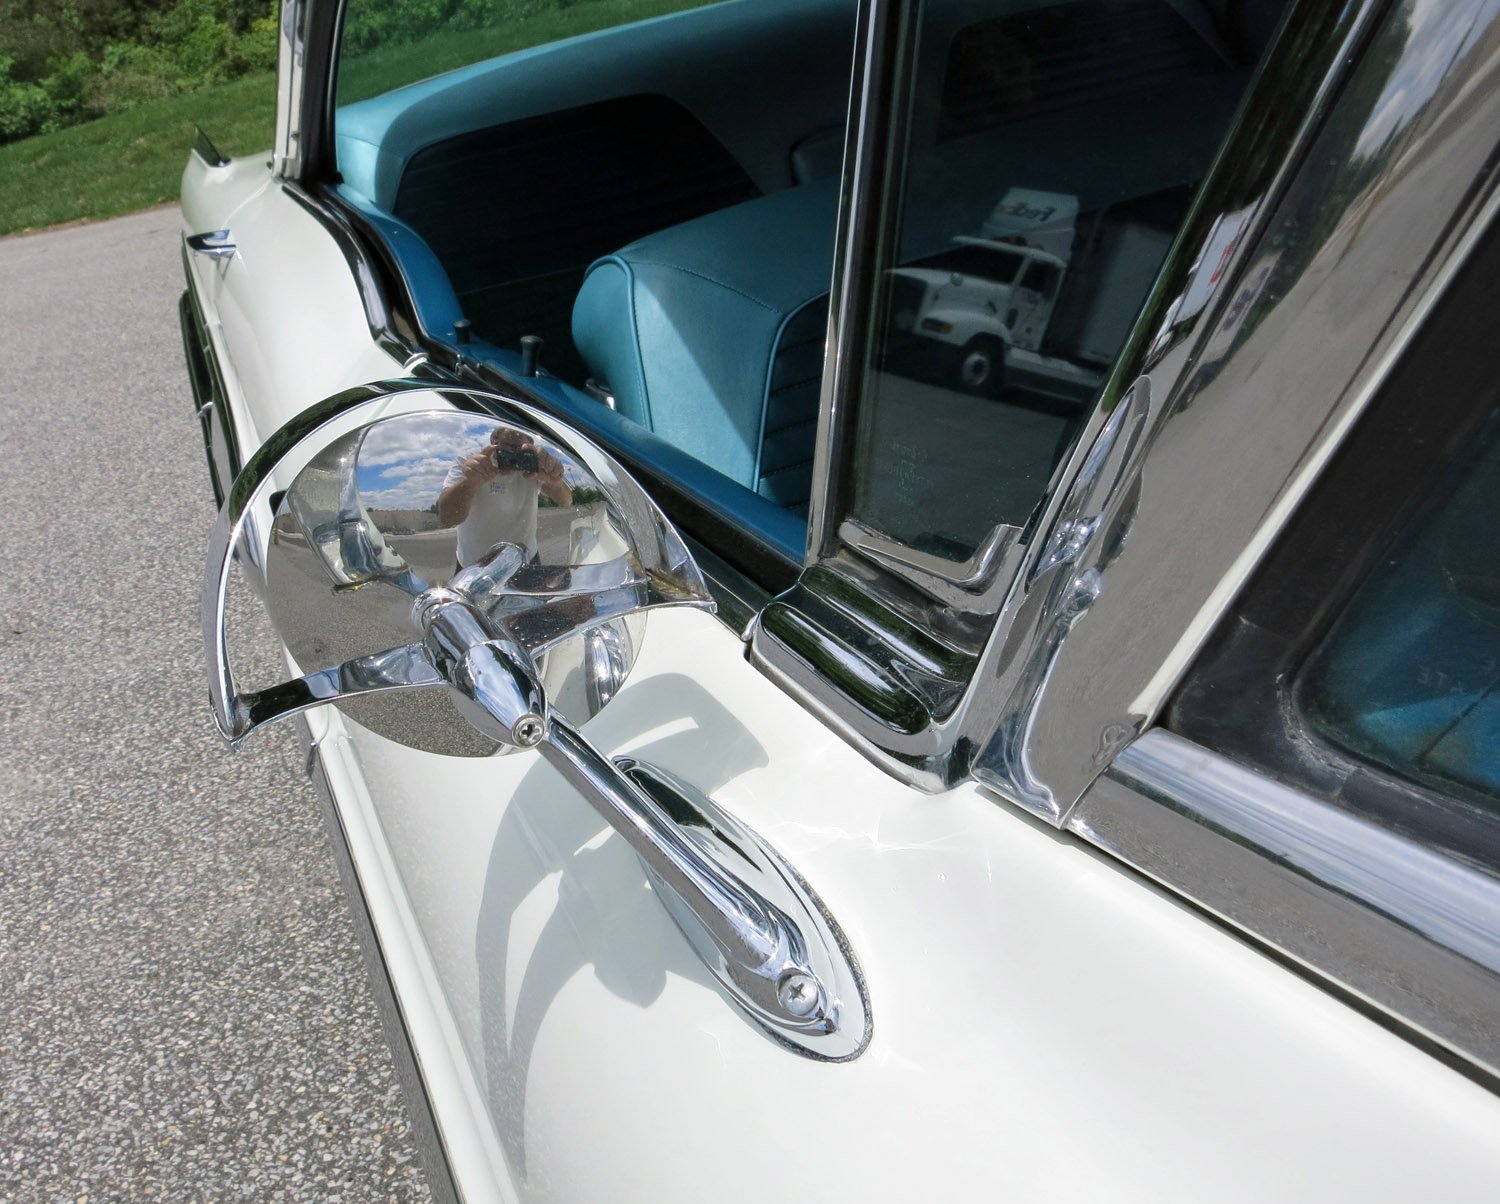 1958 Buick Century